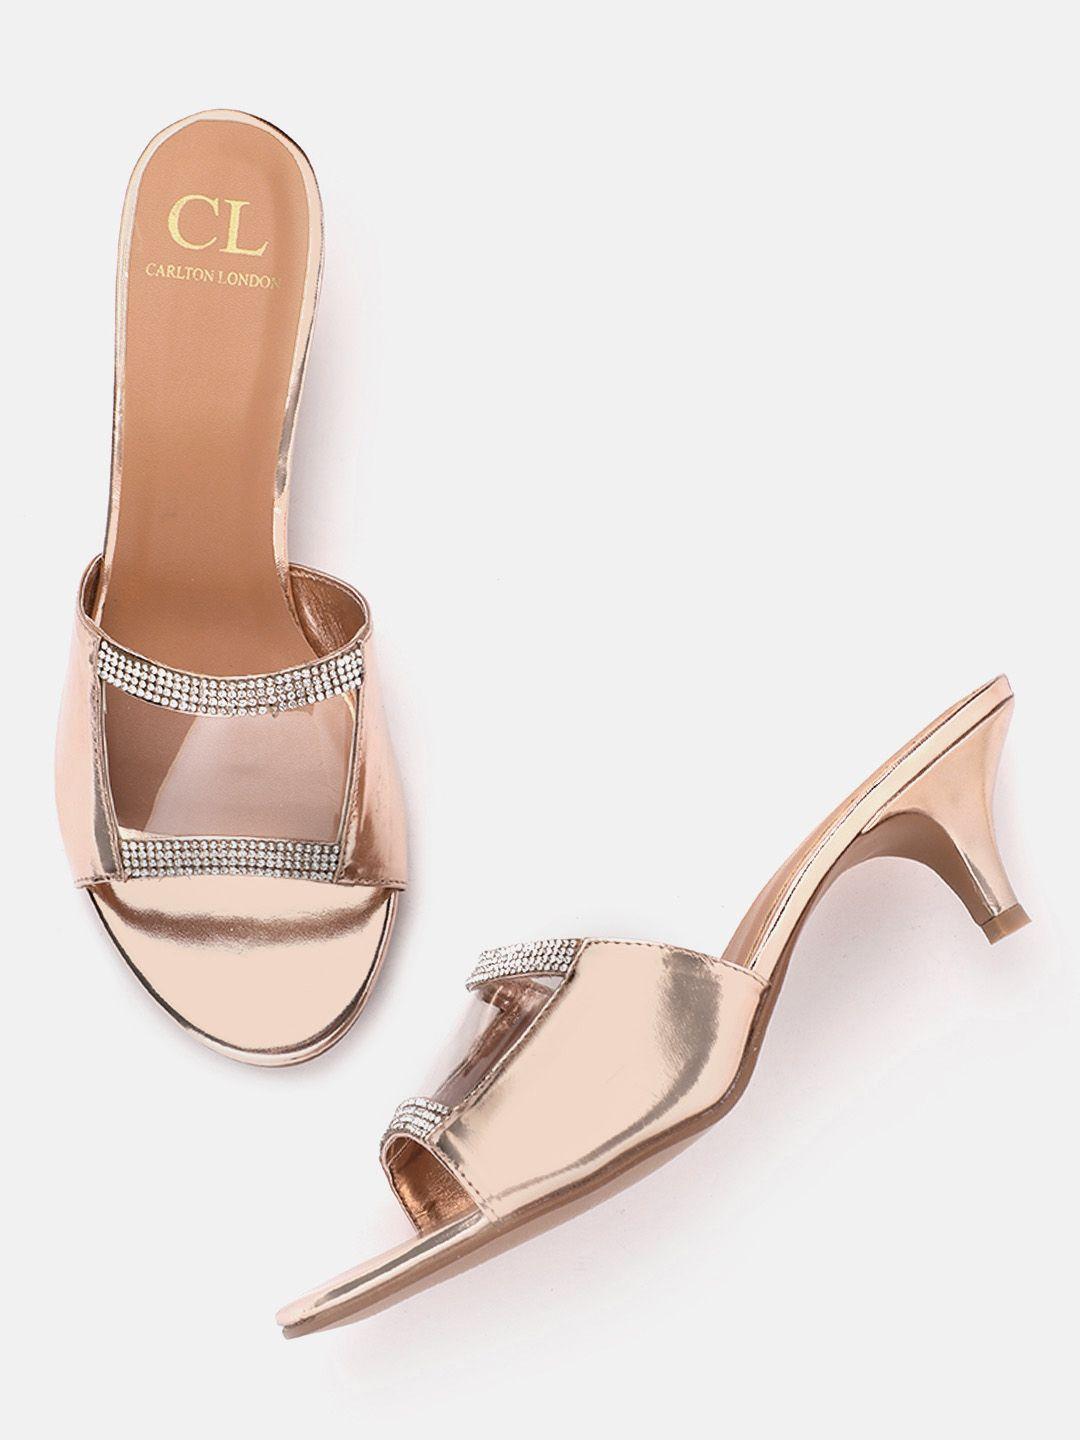 carlton london rose gold-toned & transparent embellished party kitten heels